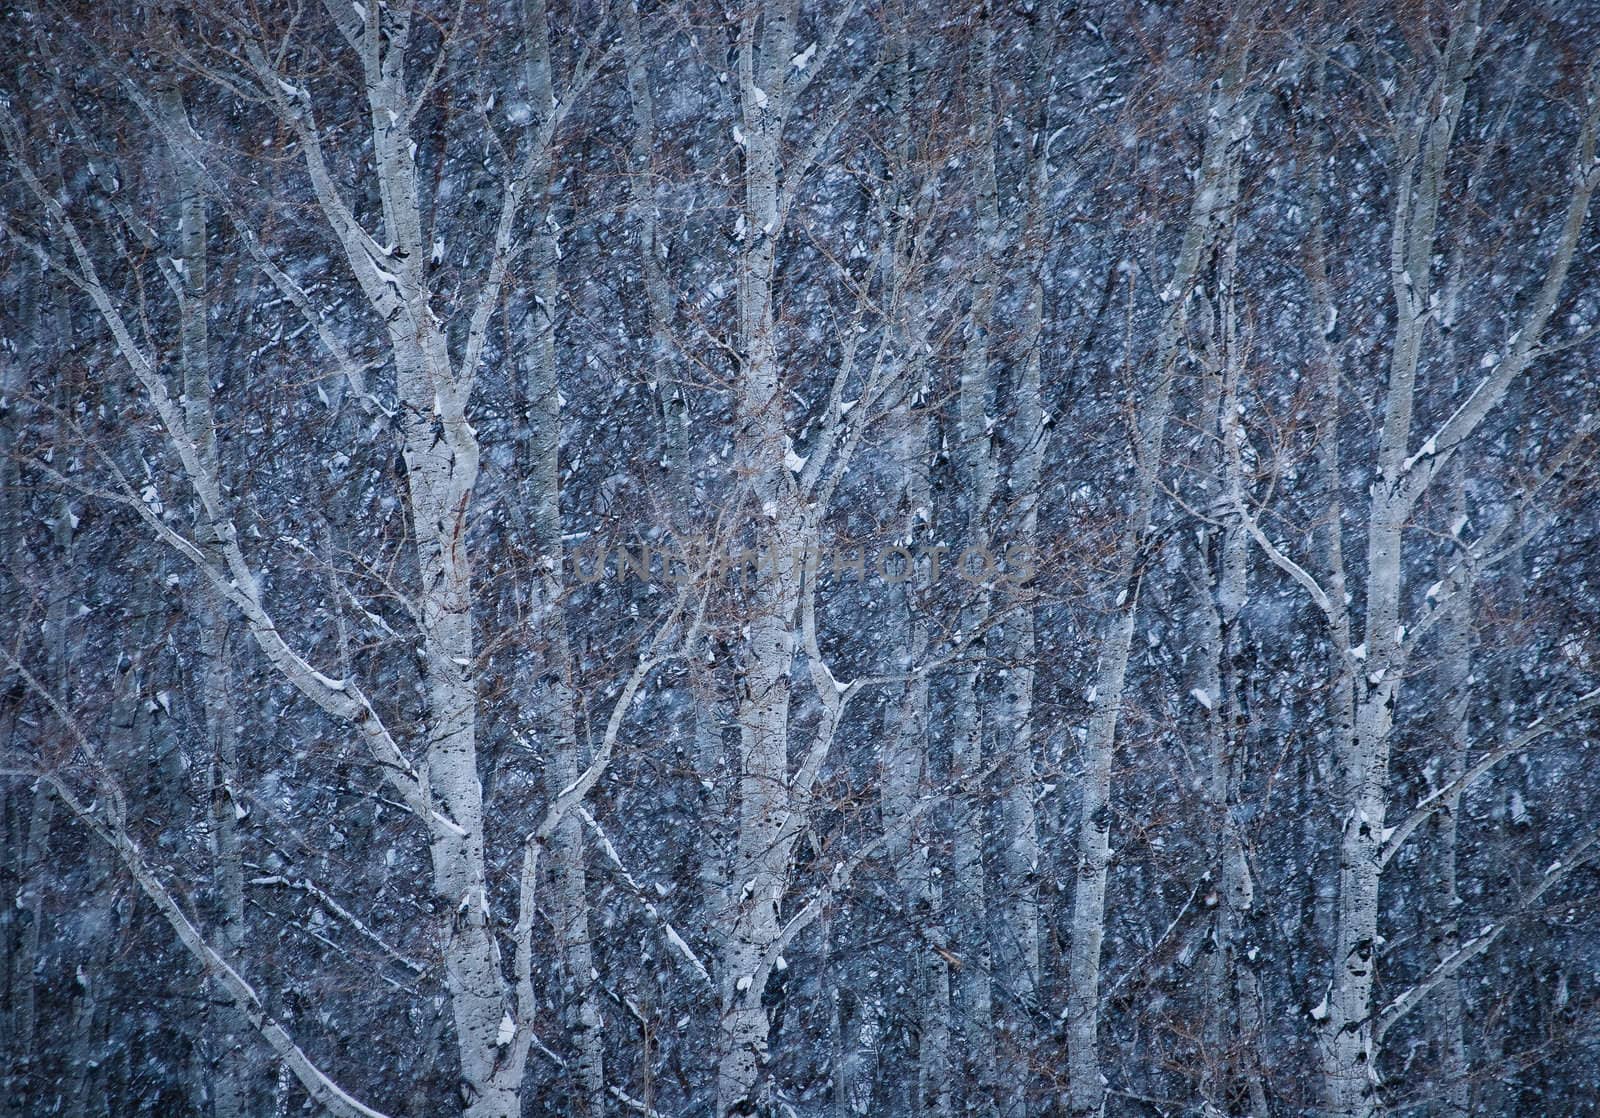 Aspen (Populus tremuloides) grove and winter snow storm, Gallatin County, Montana, USA